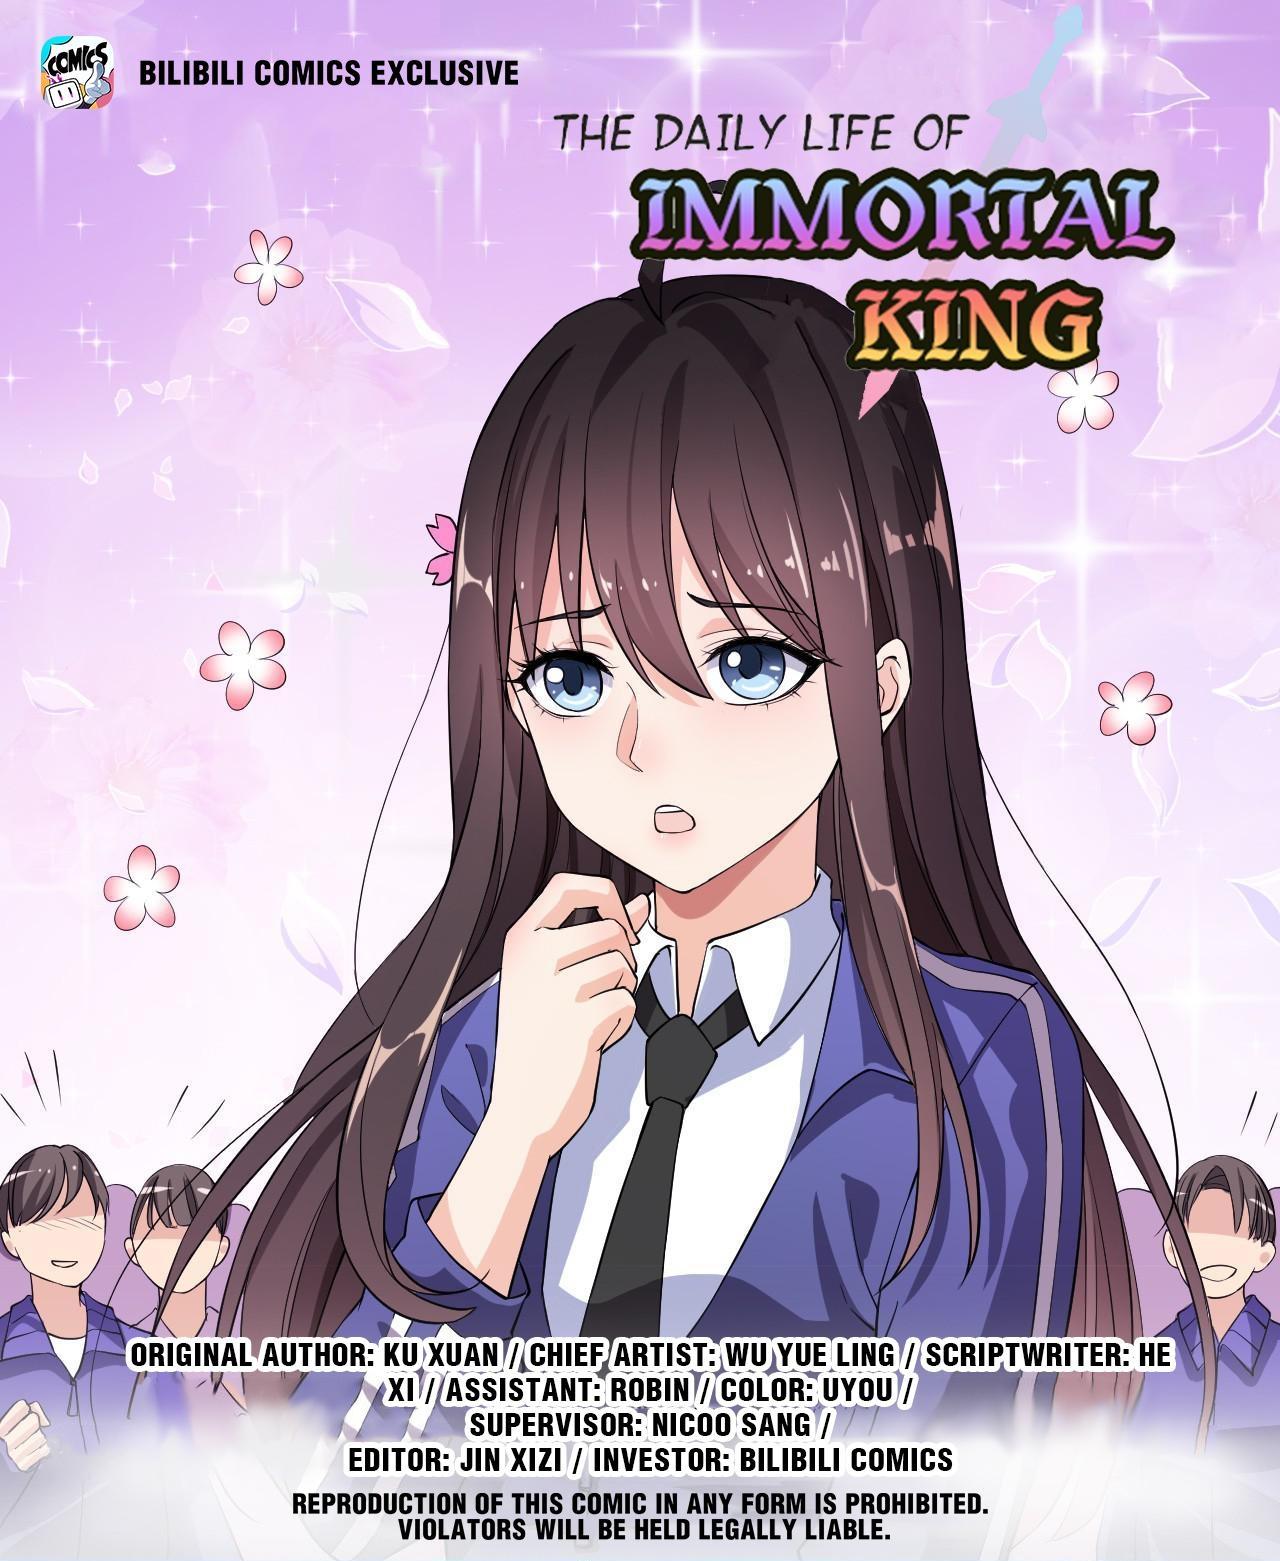 The Daily Life of Immortal King read comic online - BILIBILI COMICS